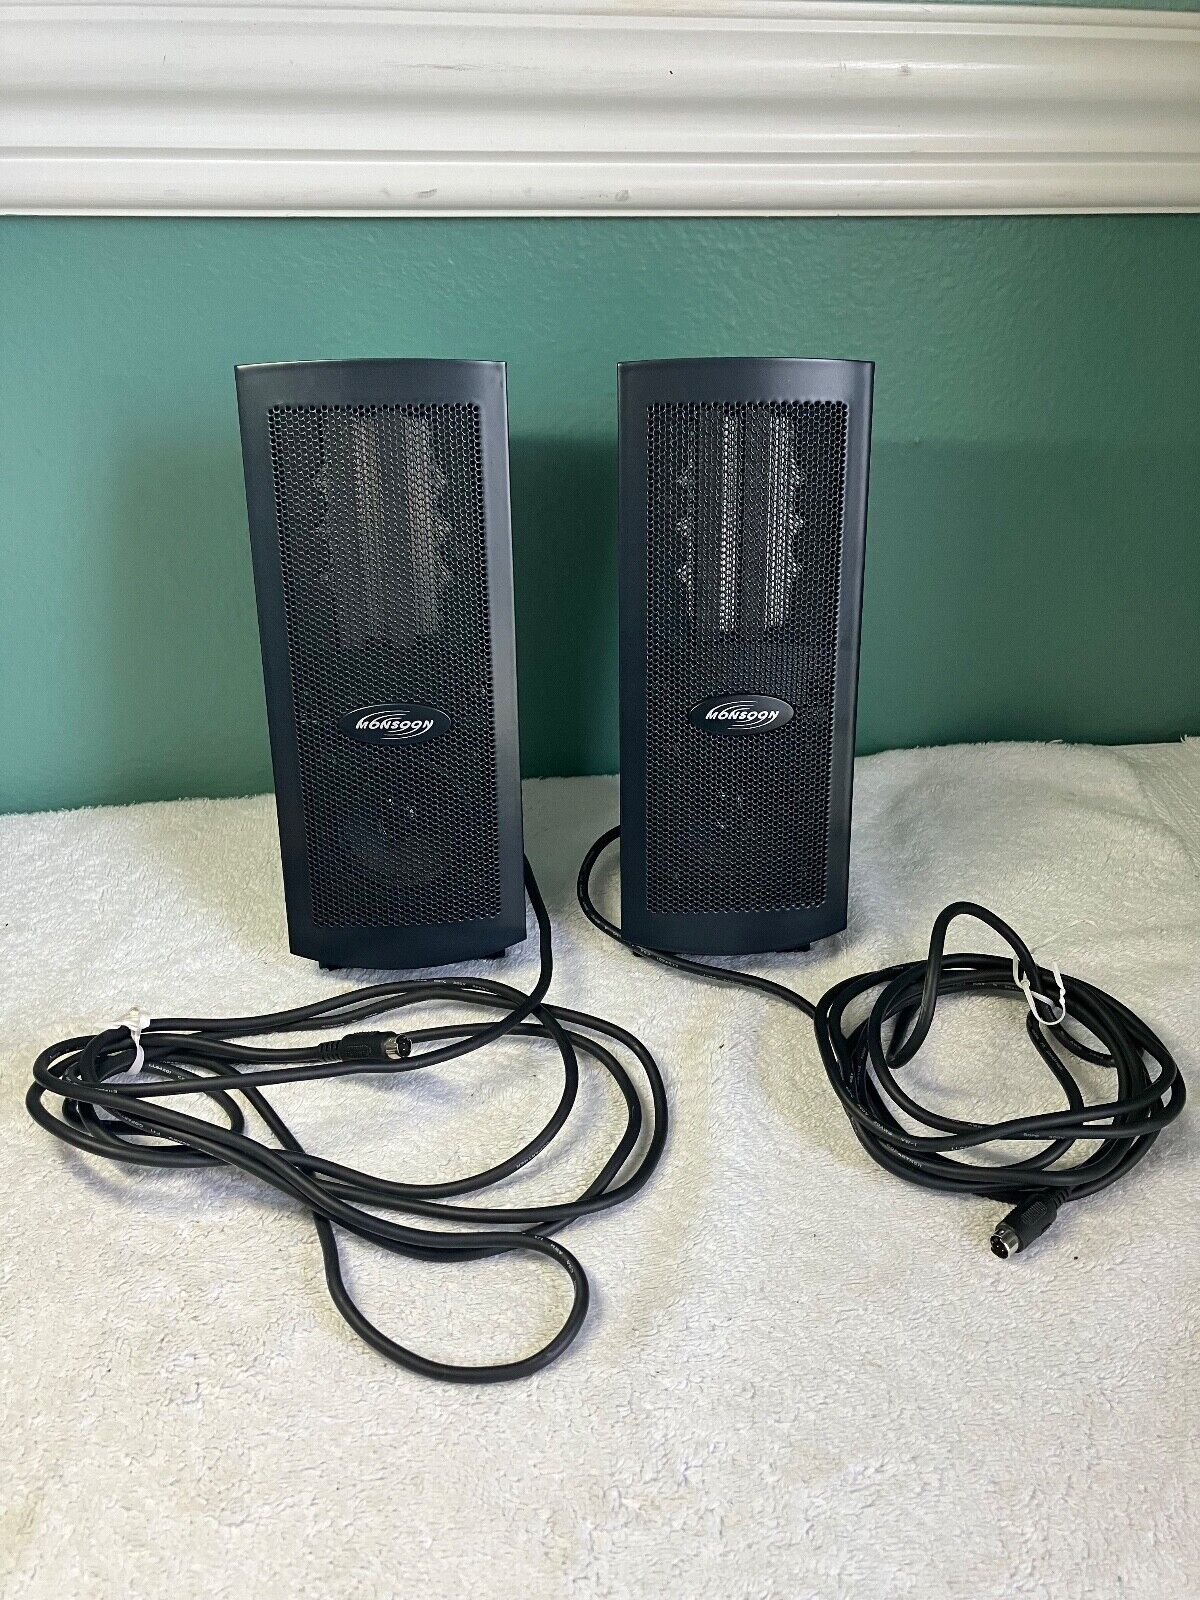 Vintage Pair of Monsoon Flat Panel Computer Speakers - No Subwoofer